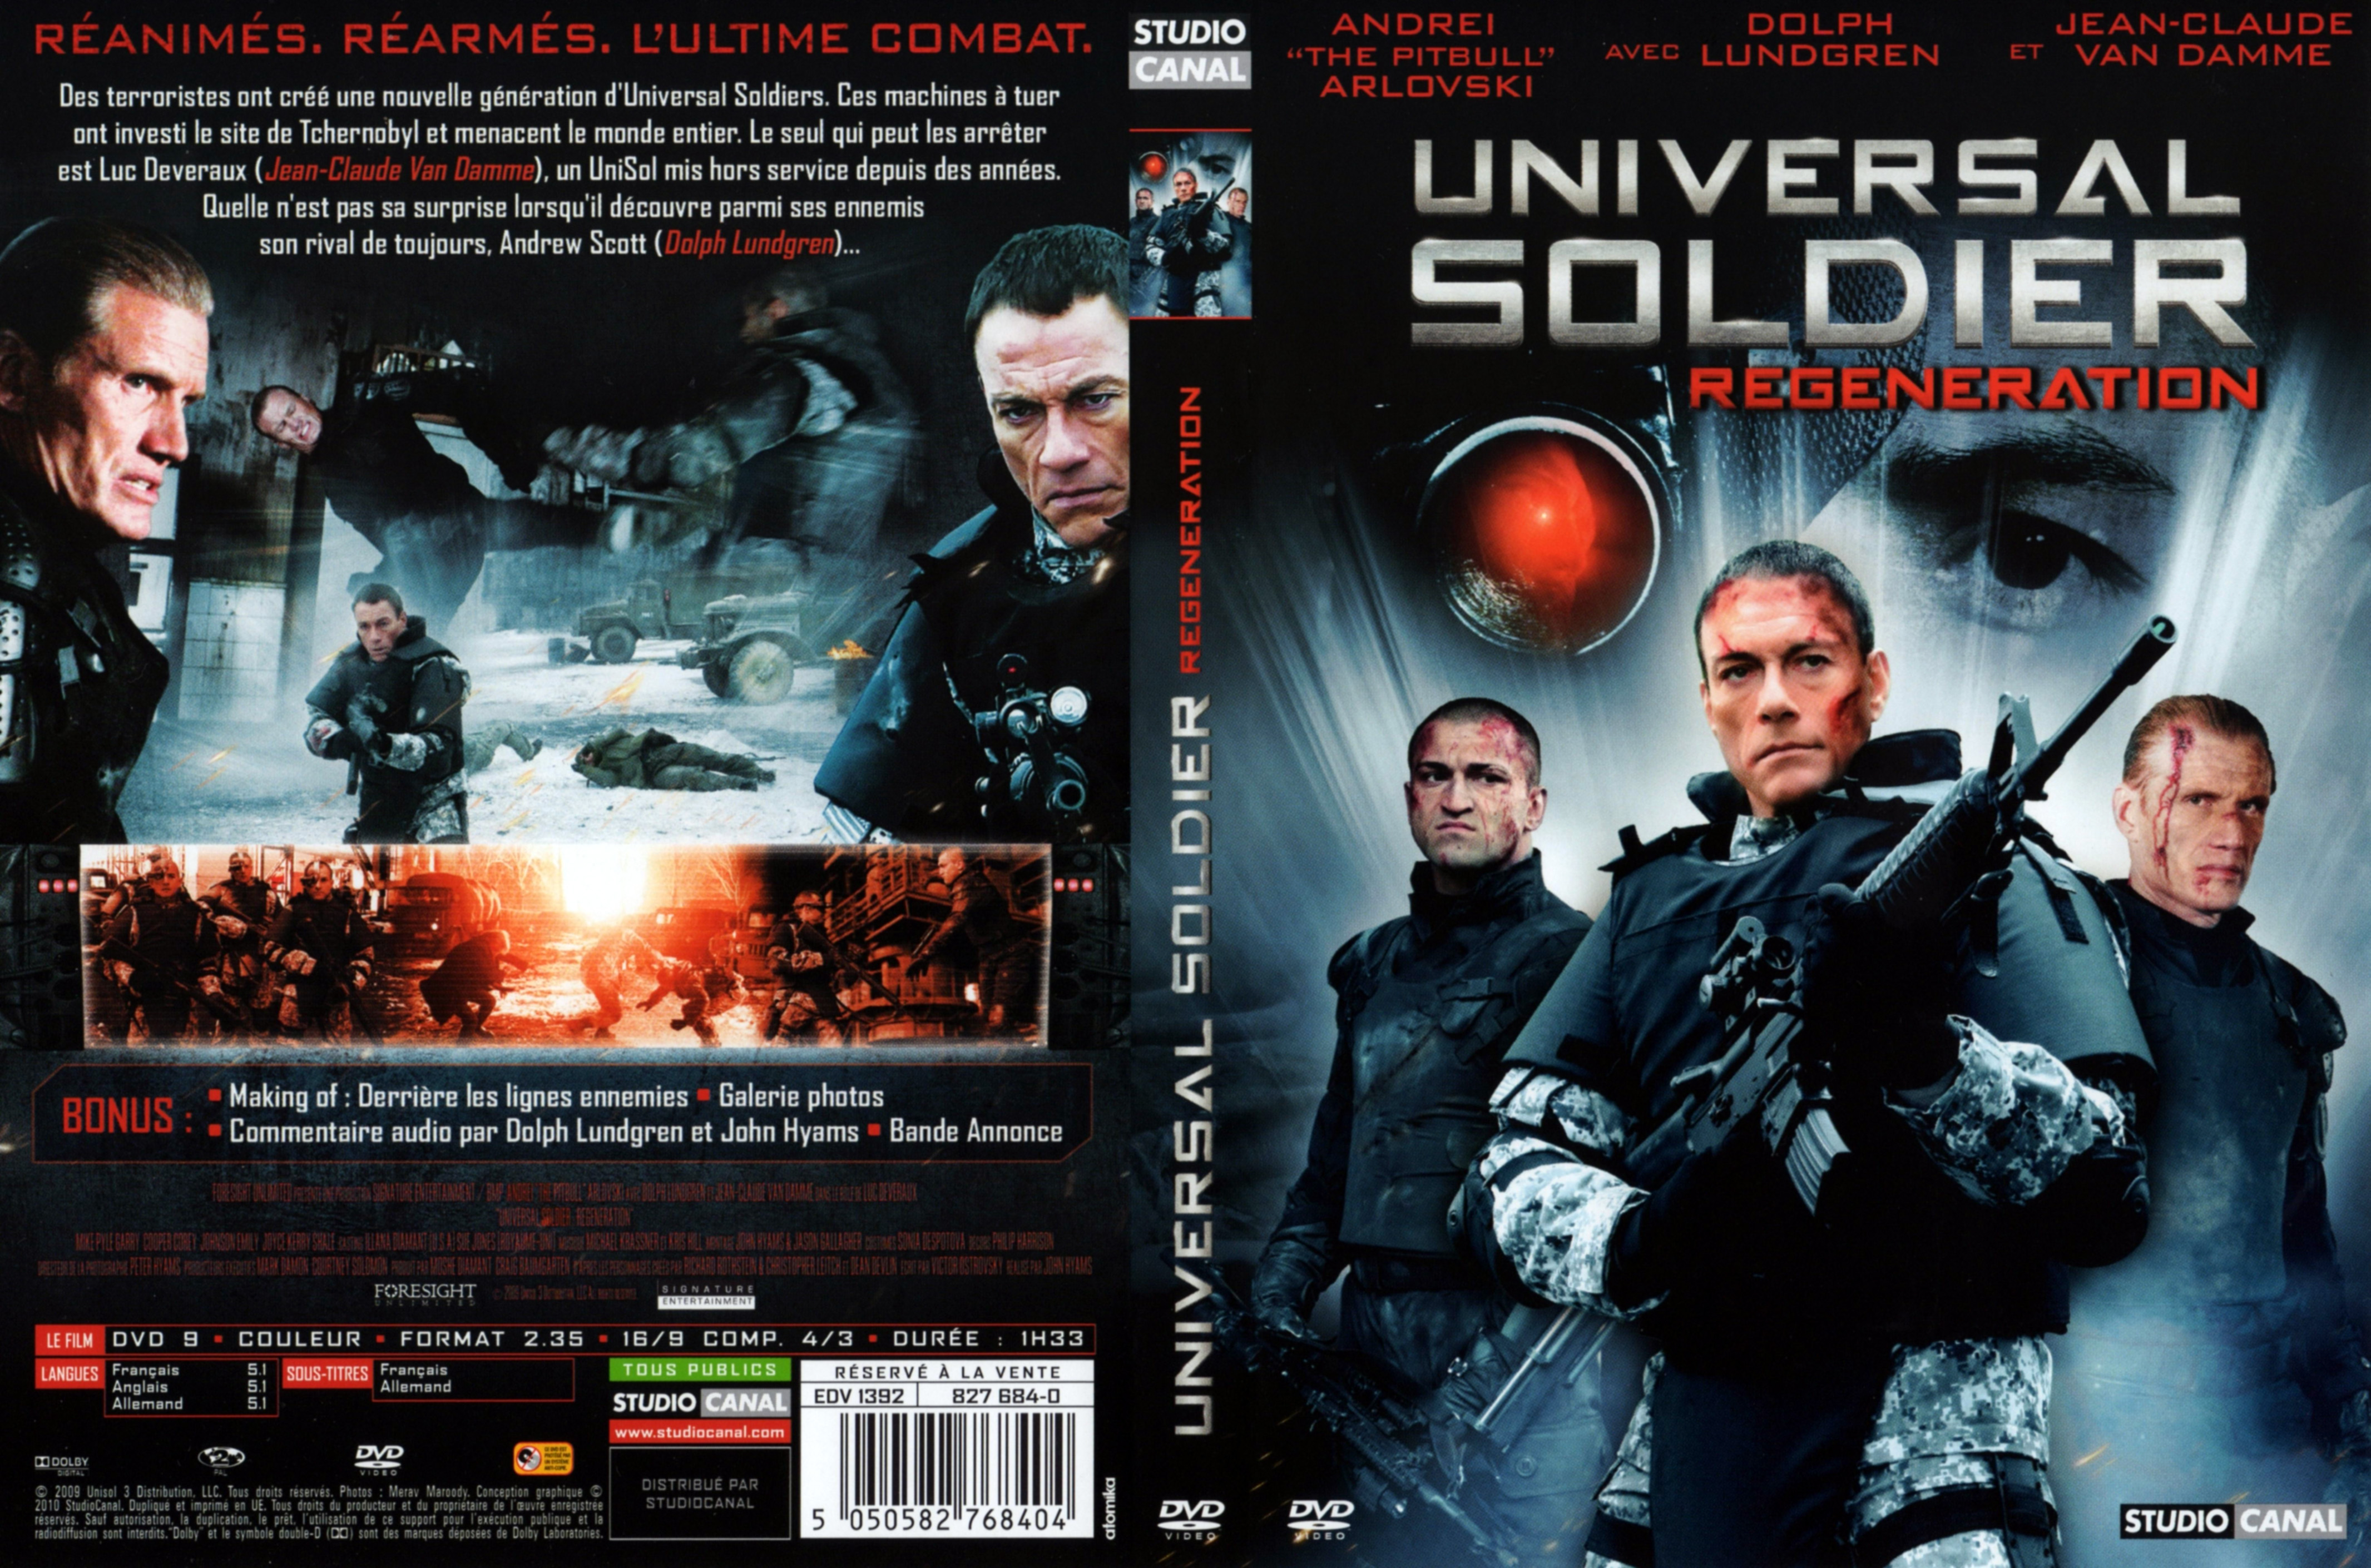 Jaquette DVD Universal soldier regeneration